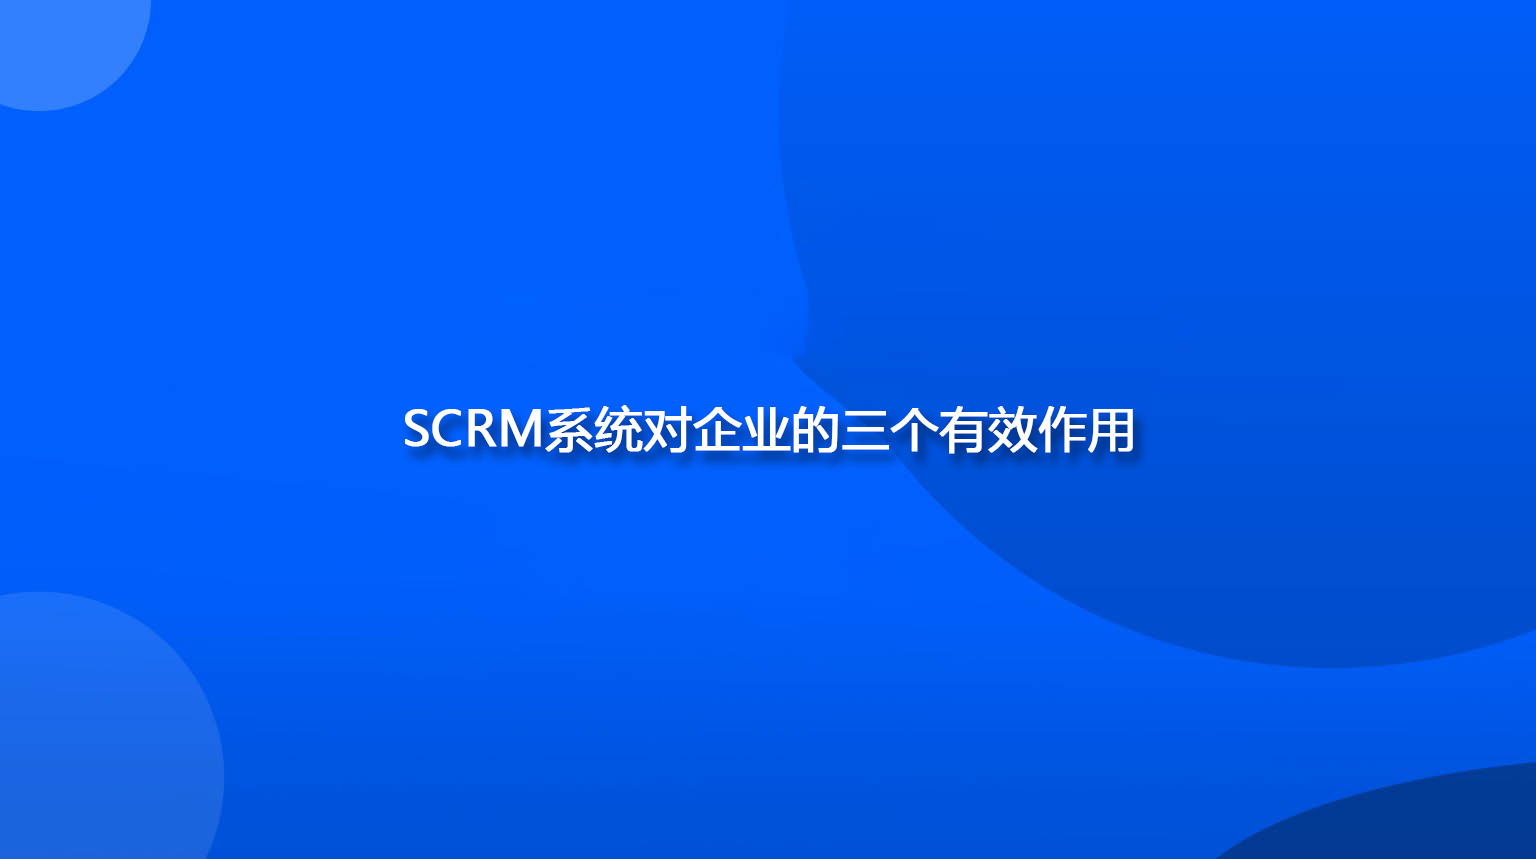 SCRM系统对企业的三个有效作用